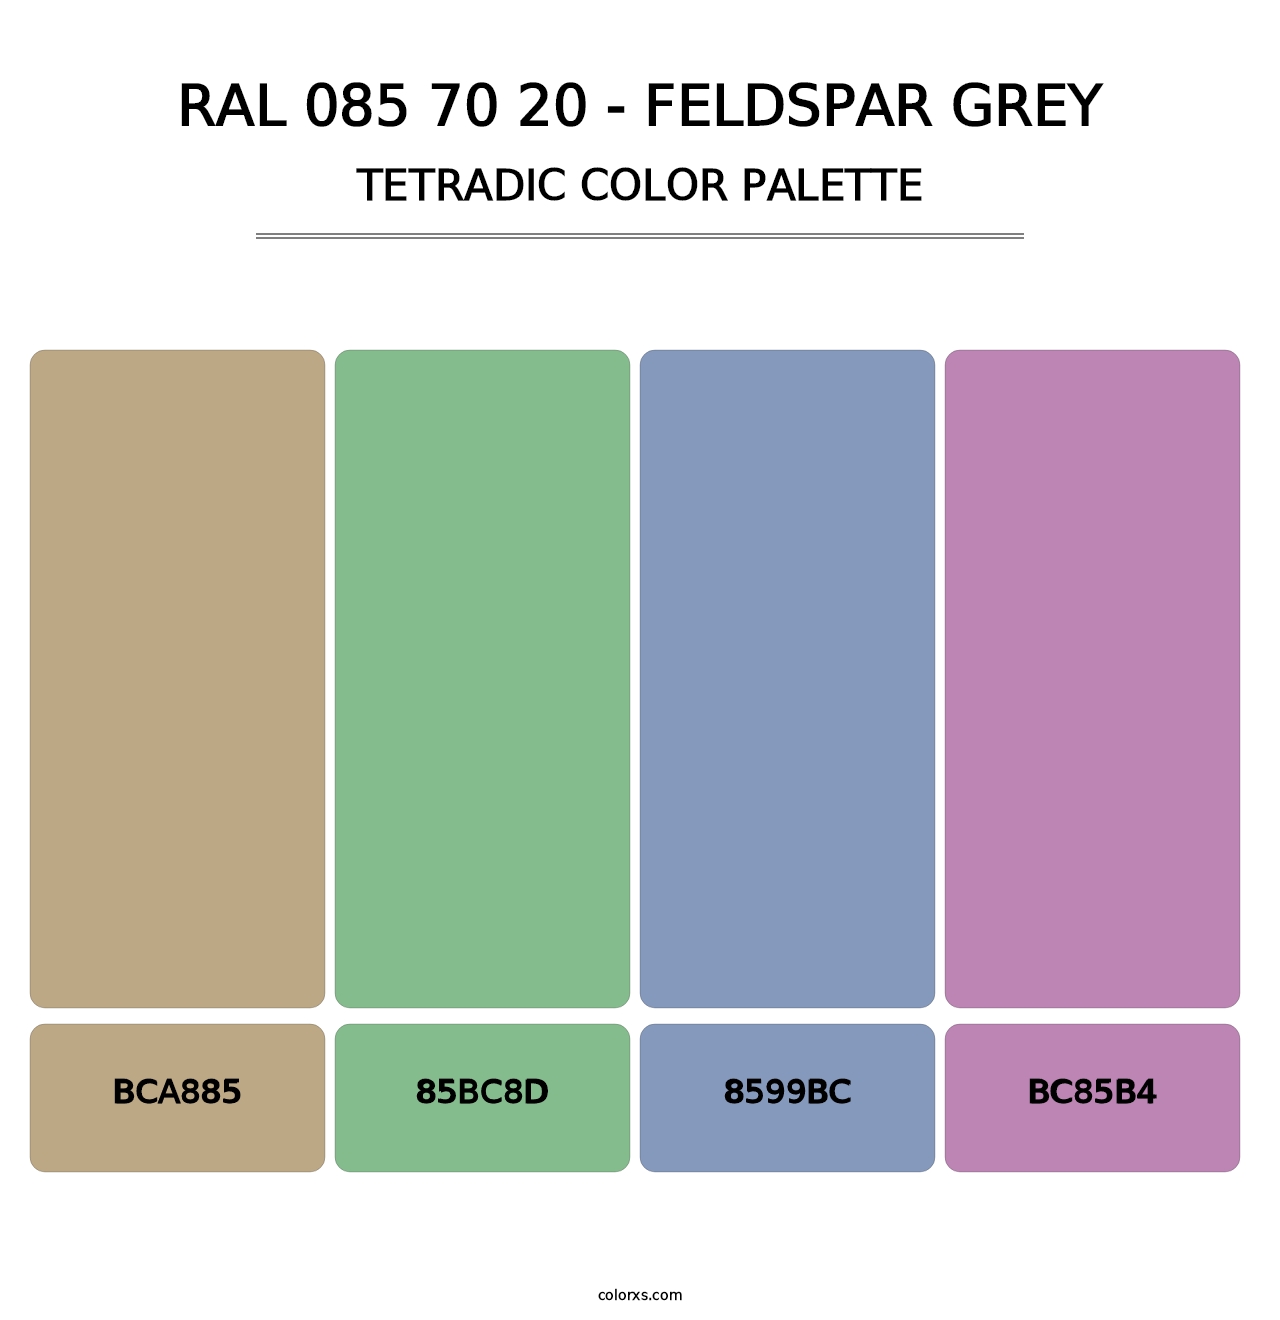 RAL 085 70 20 - Feldspar Grey - Tetradic Color Palette